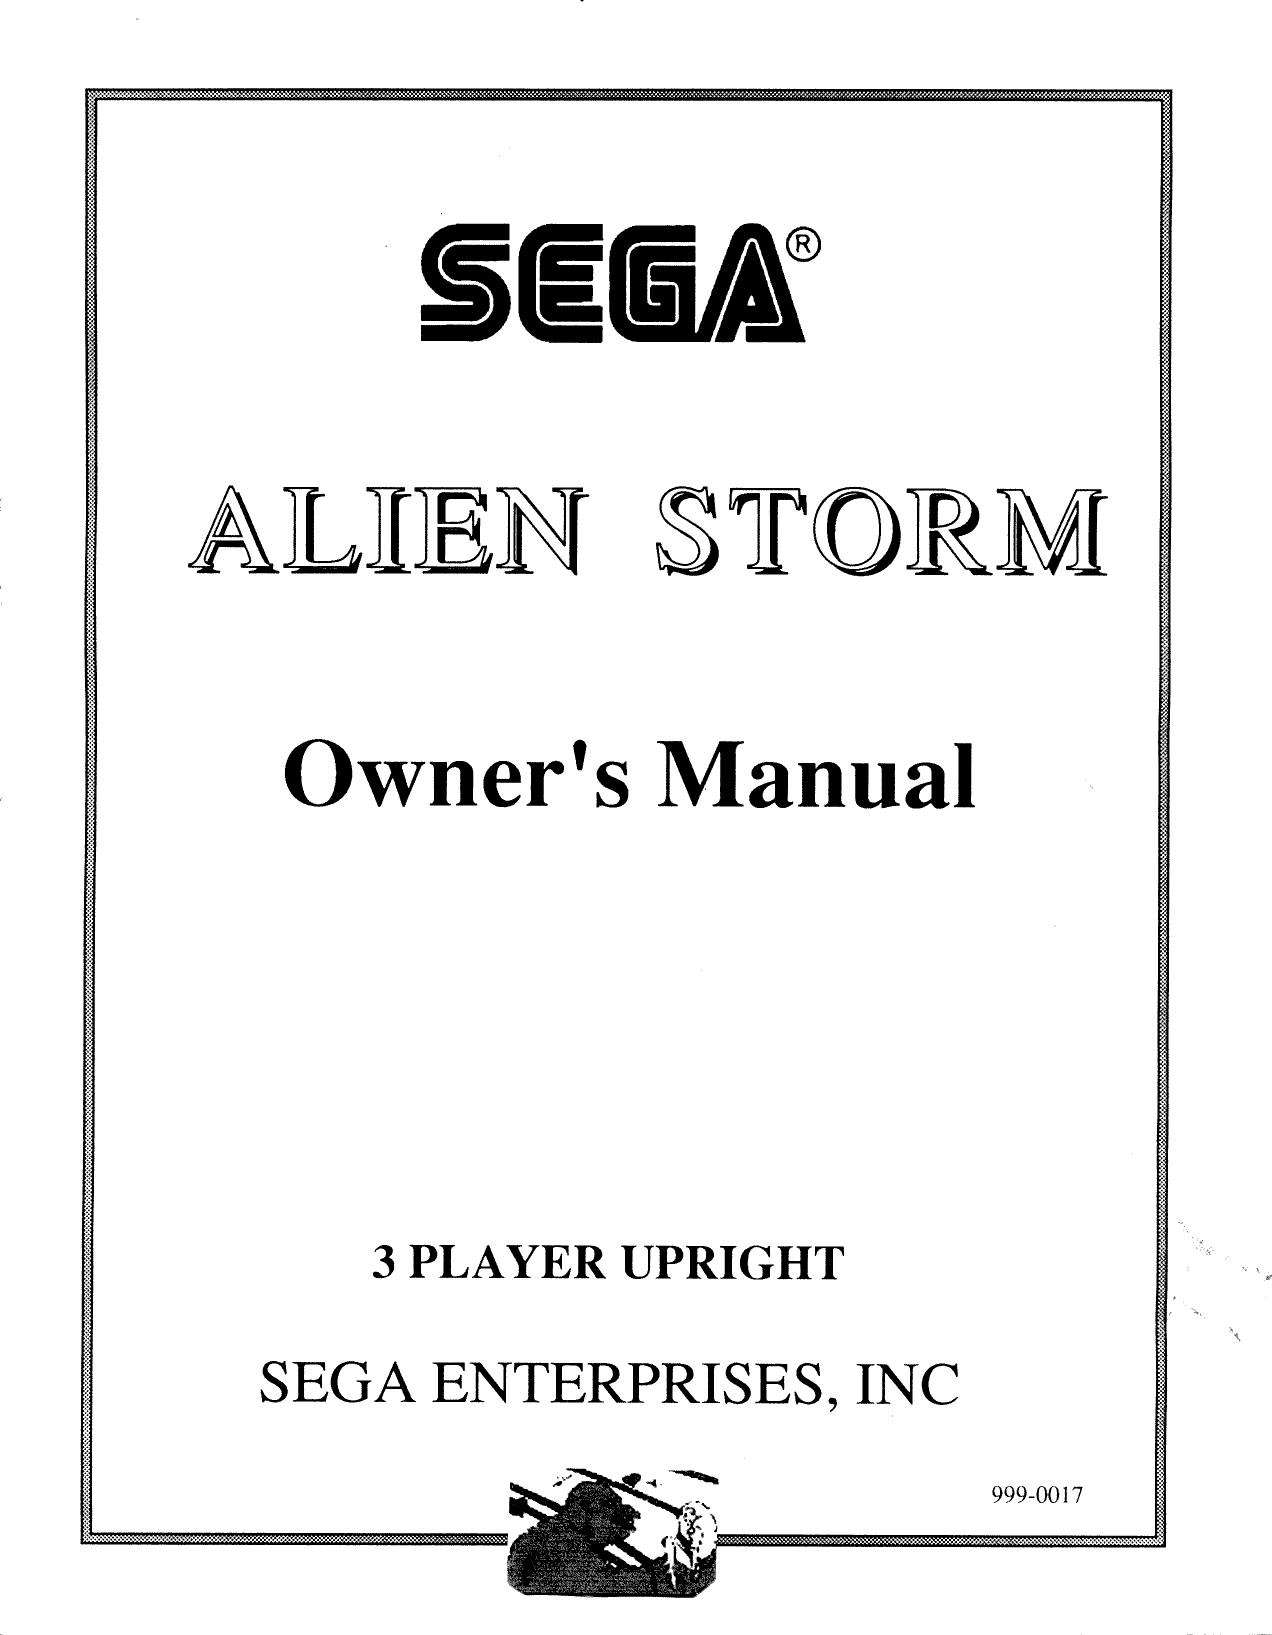 AlienStorm Manual